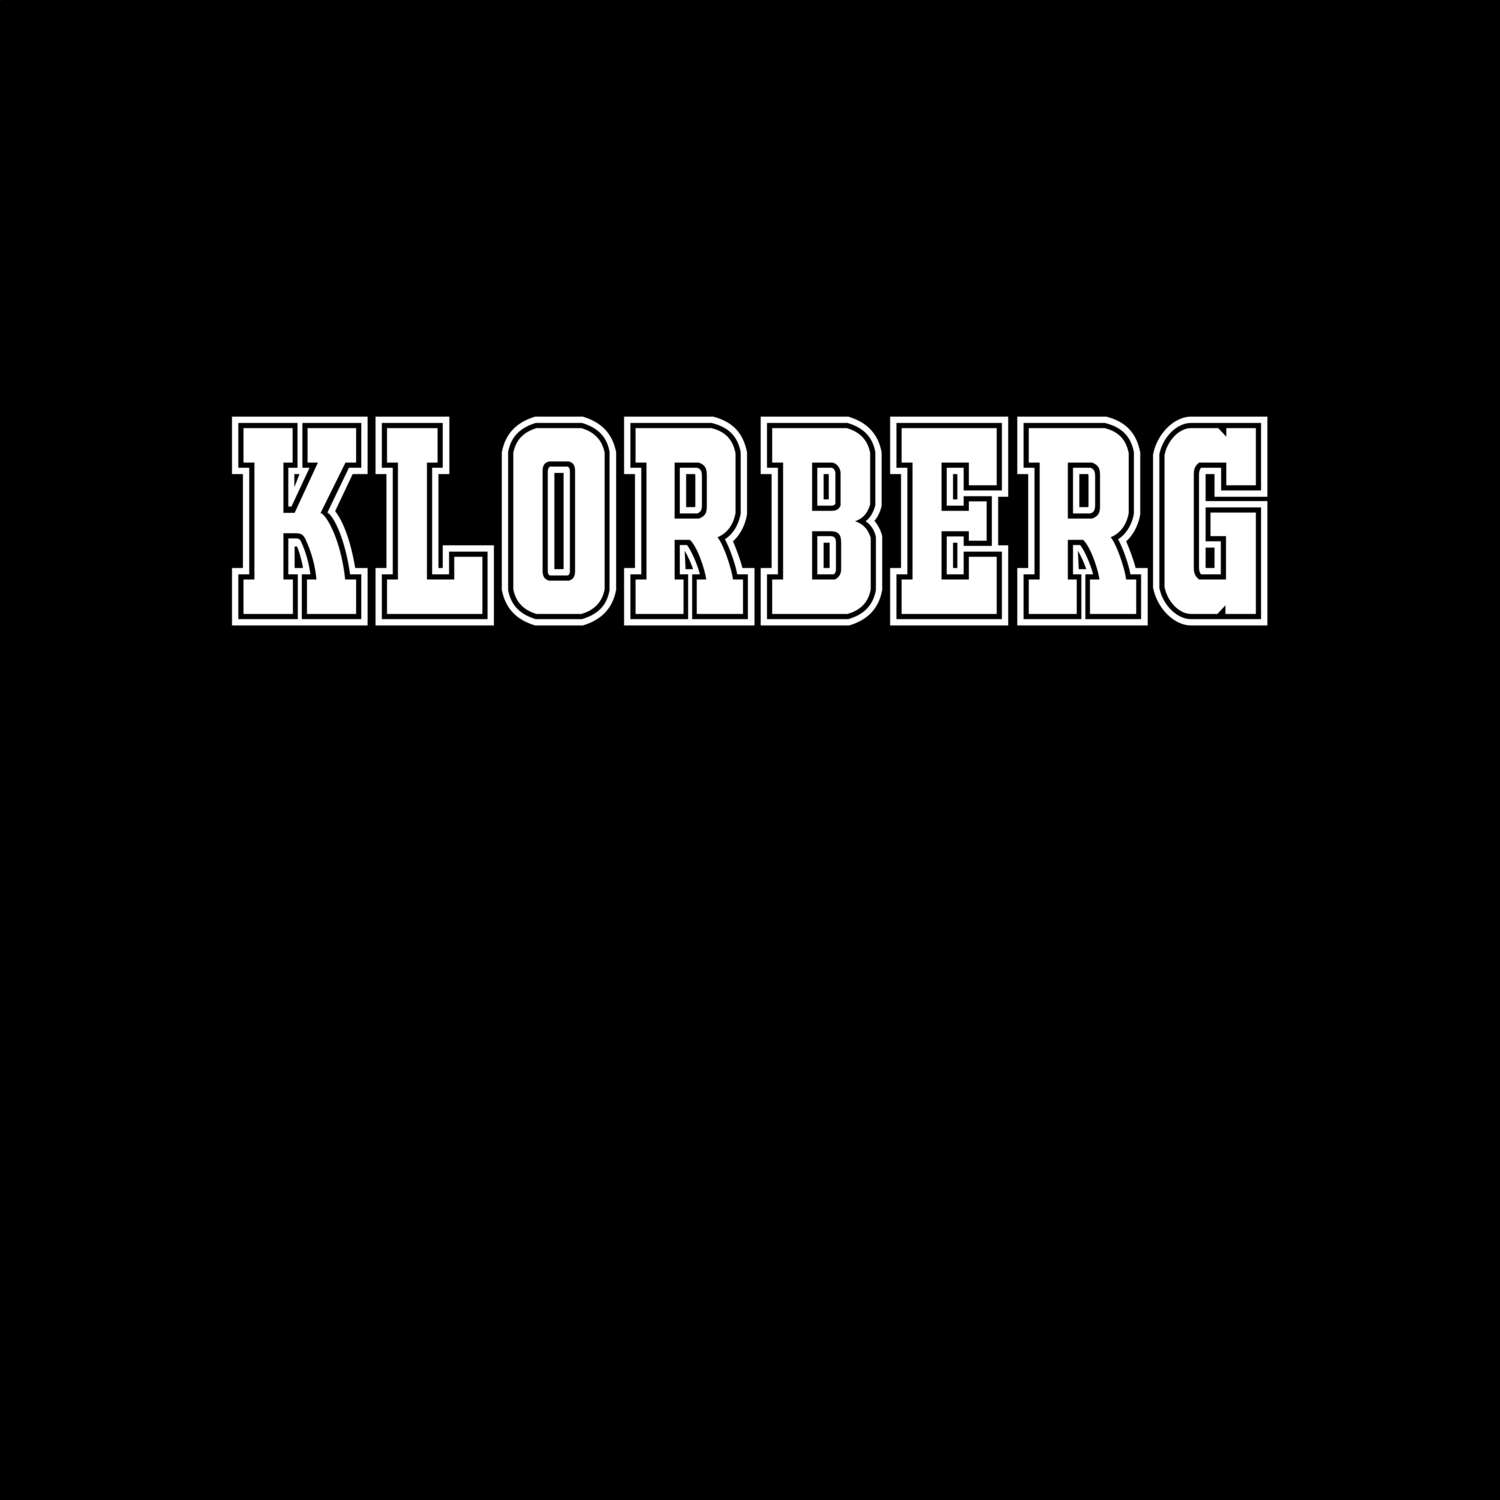 Klorberg T-Shirt »Classic«